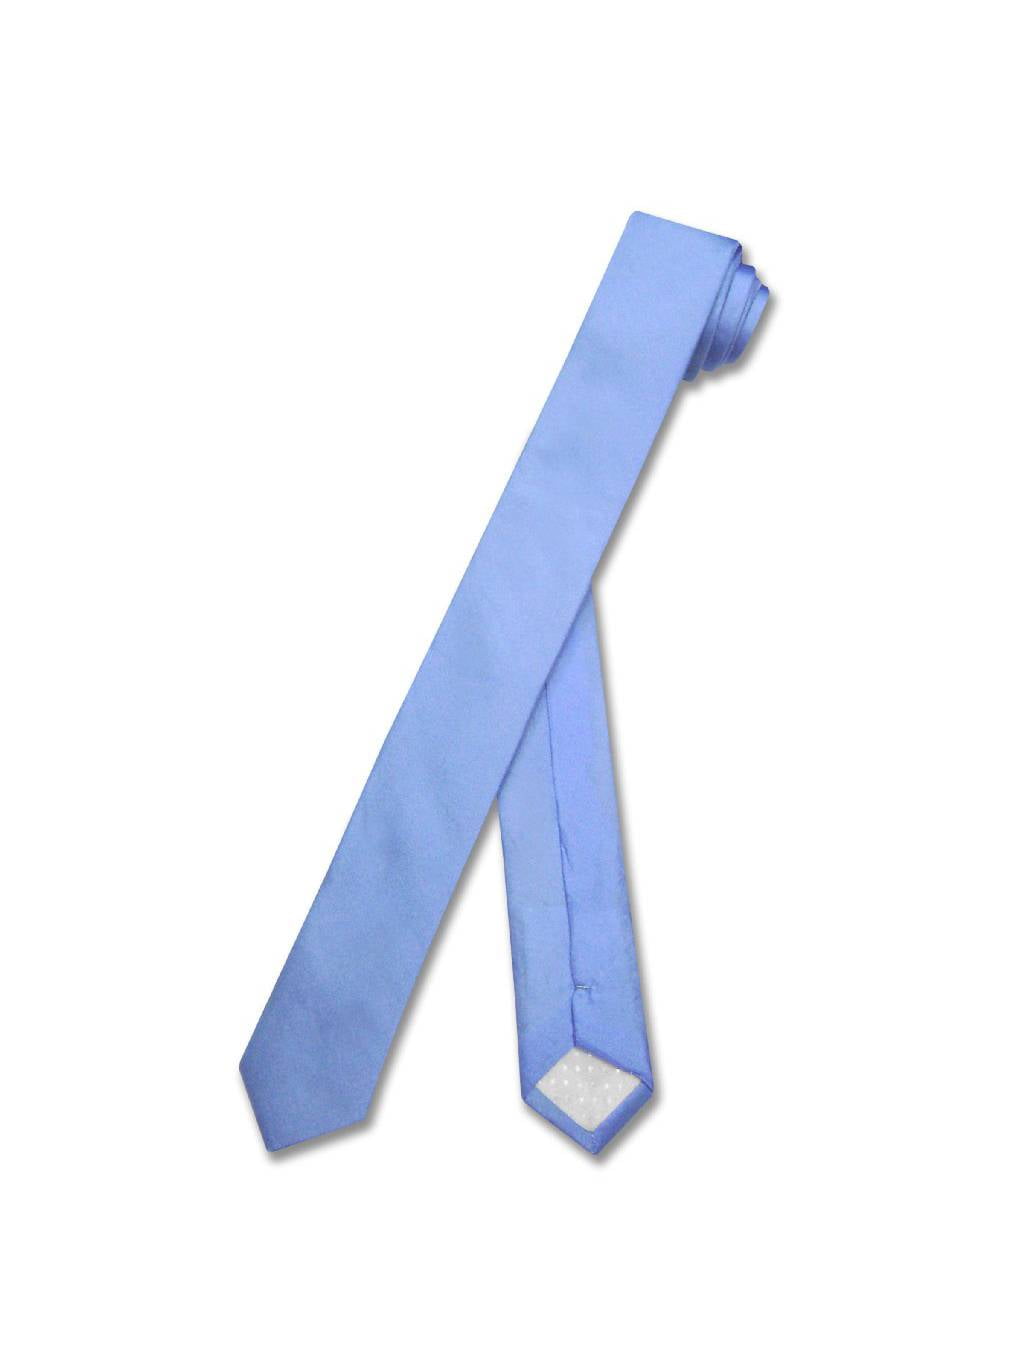 NEW 100% Silk Men's Neck tie & hankie set skinny 2.5" ROYAL BLUE formal wedding 